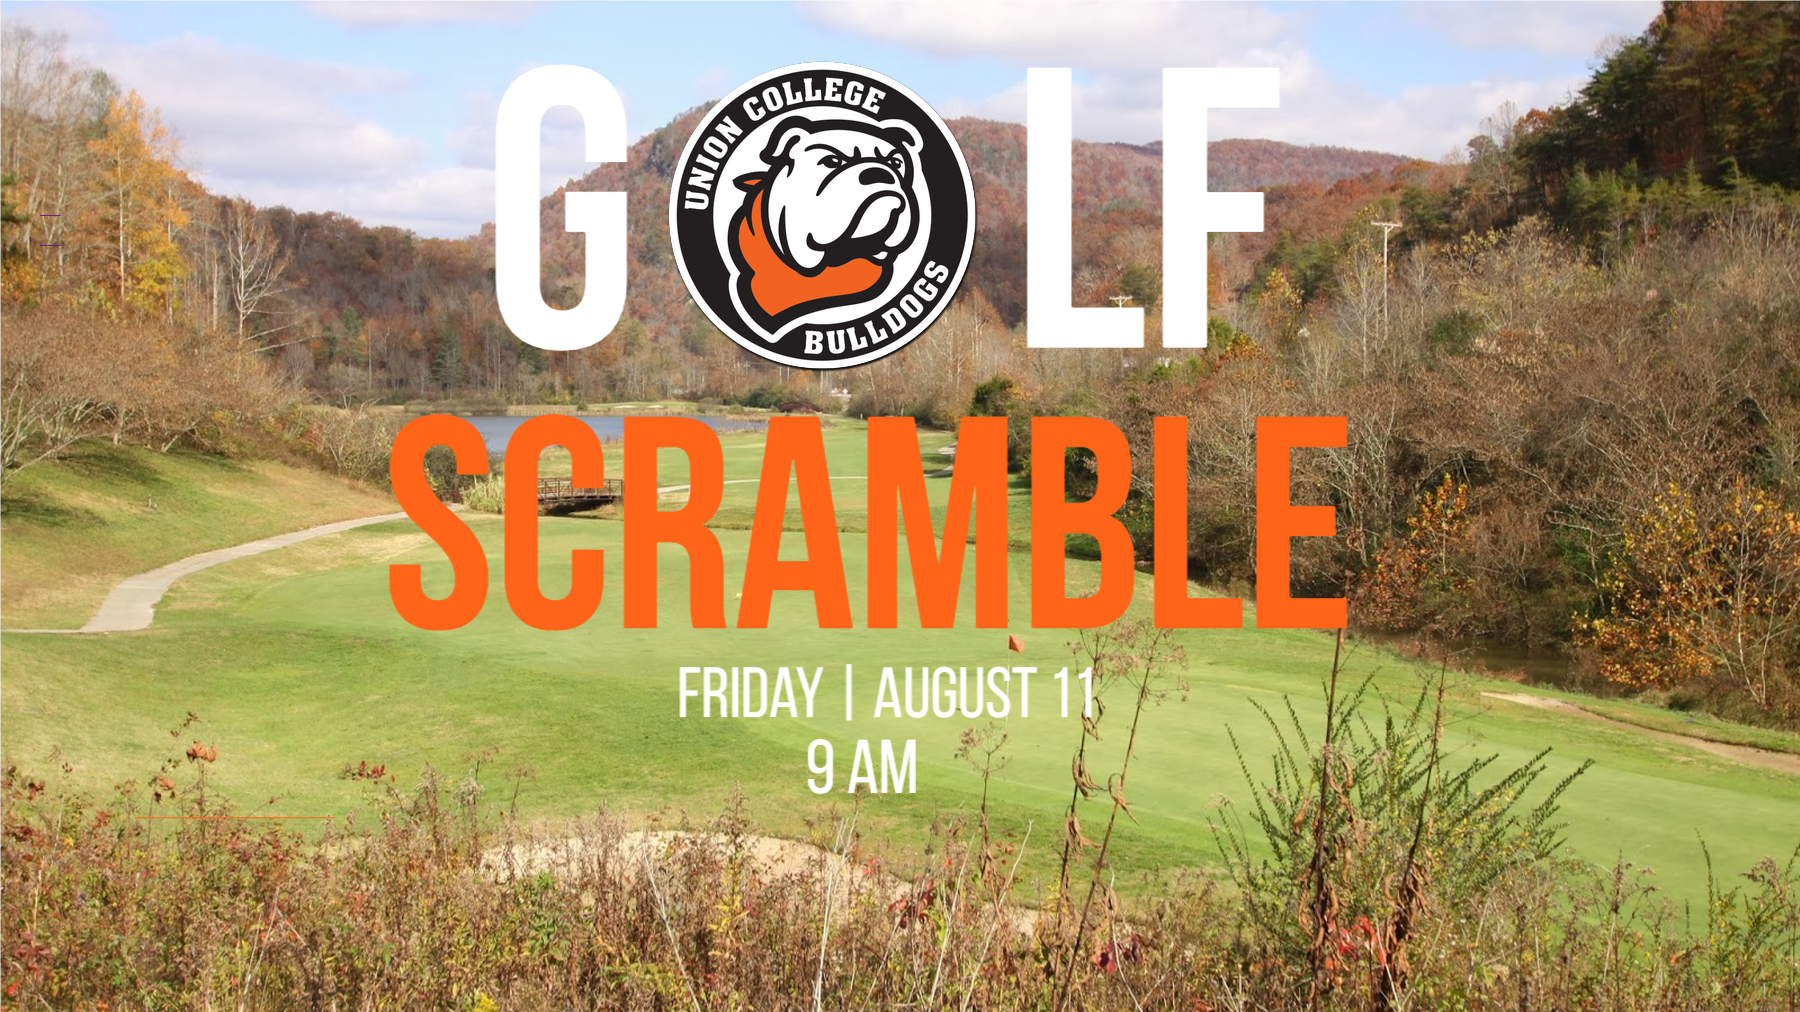 Golf team to host golf scramble Aug. 11